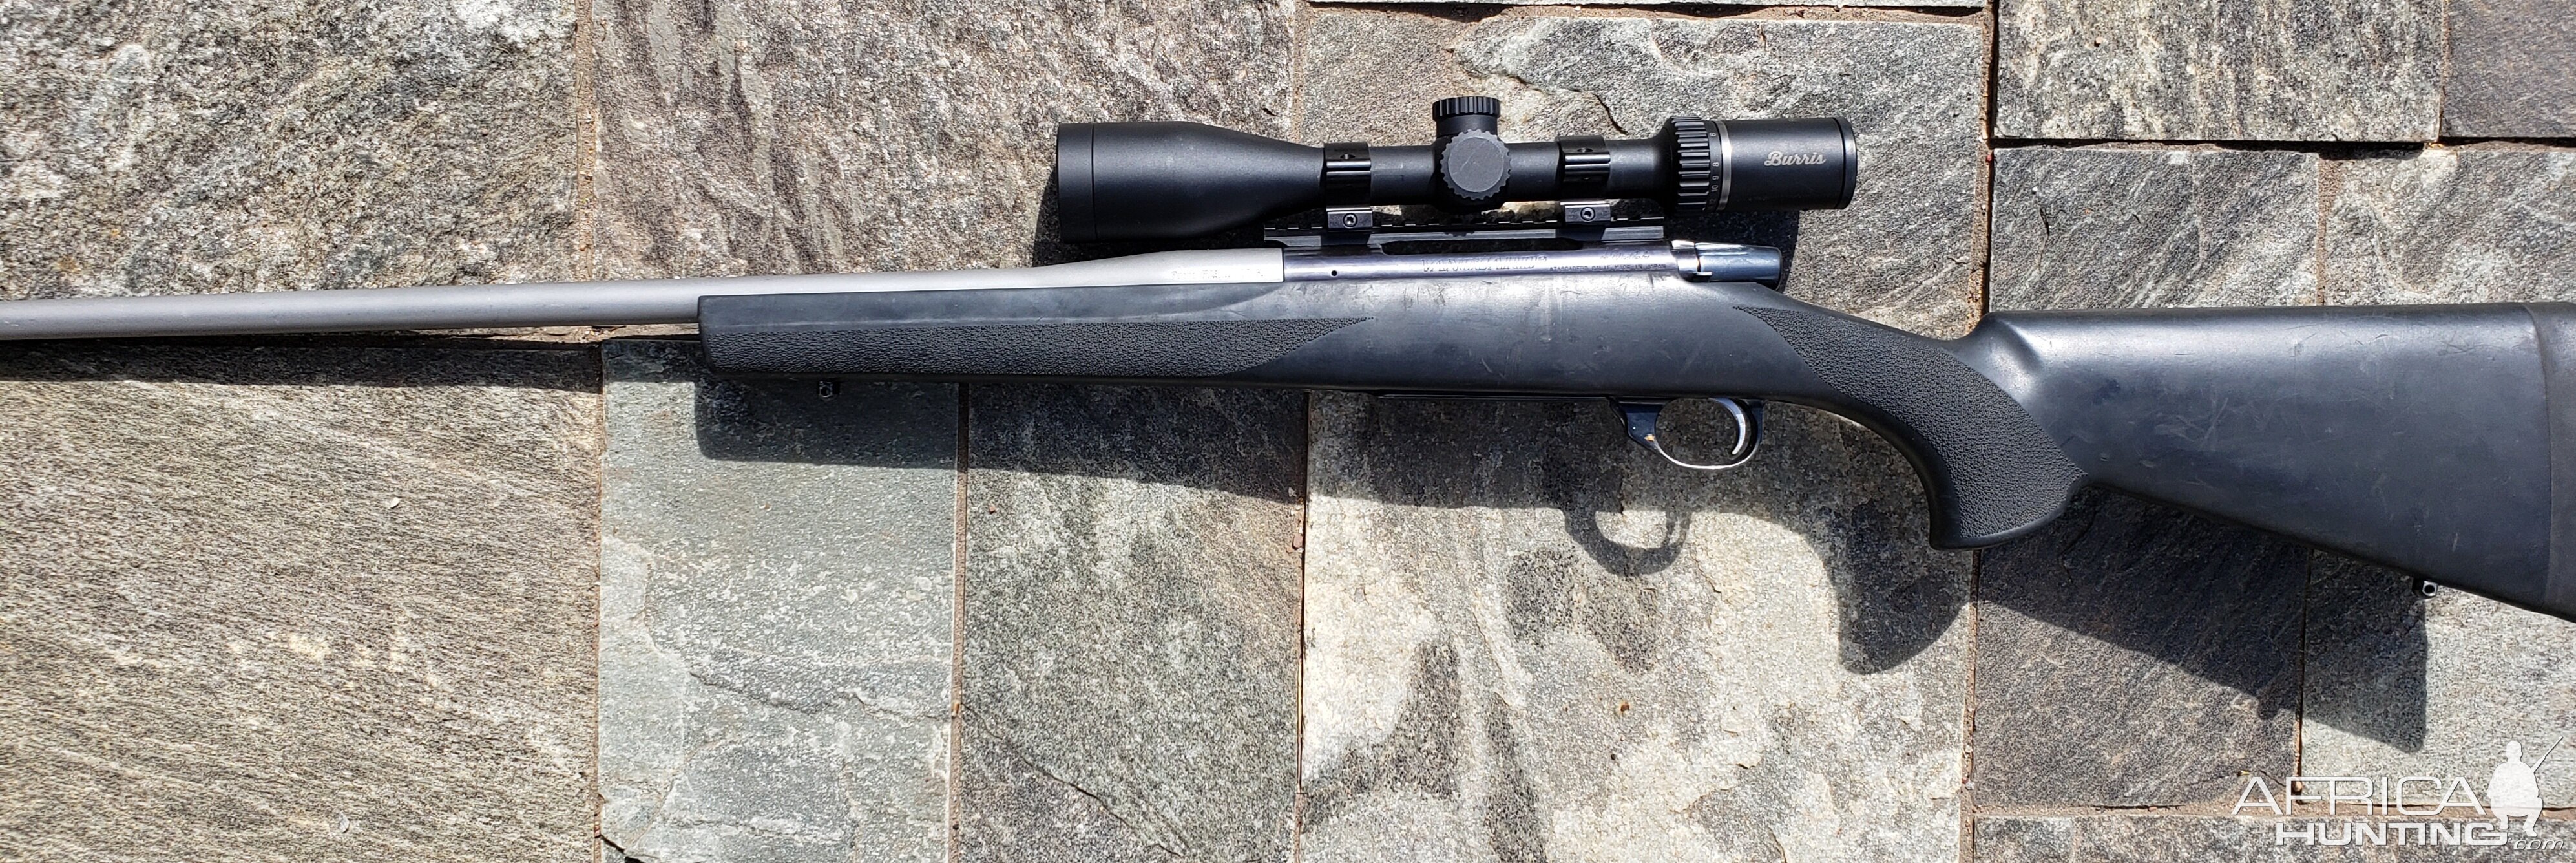 Texas Truck Rifle Rifle In 7mm Remington Magnum